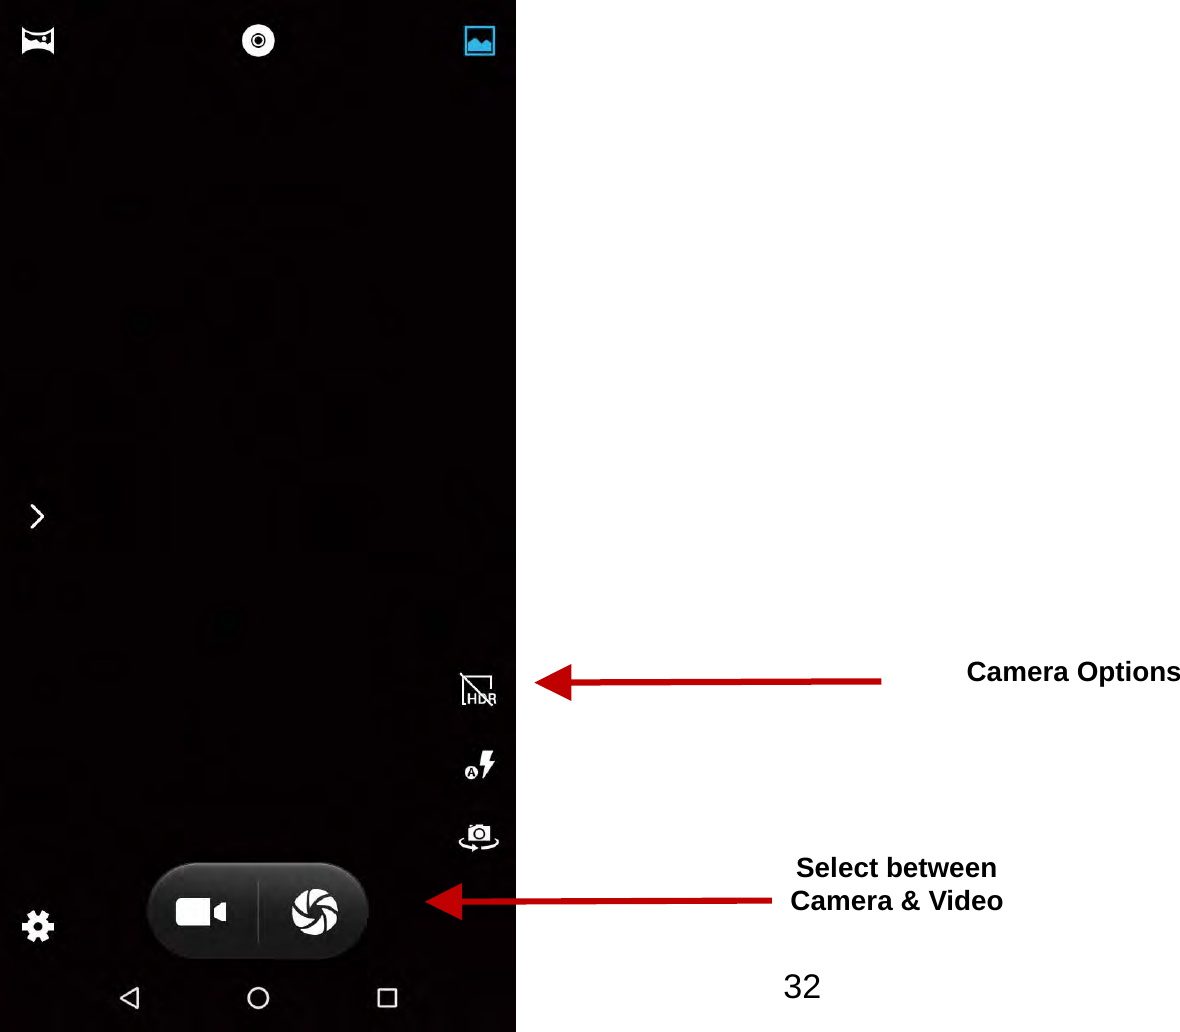   32 Select between Camera &amp; Video Camera Options 